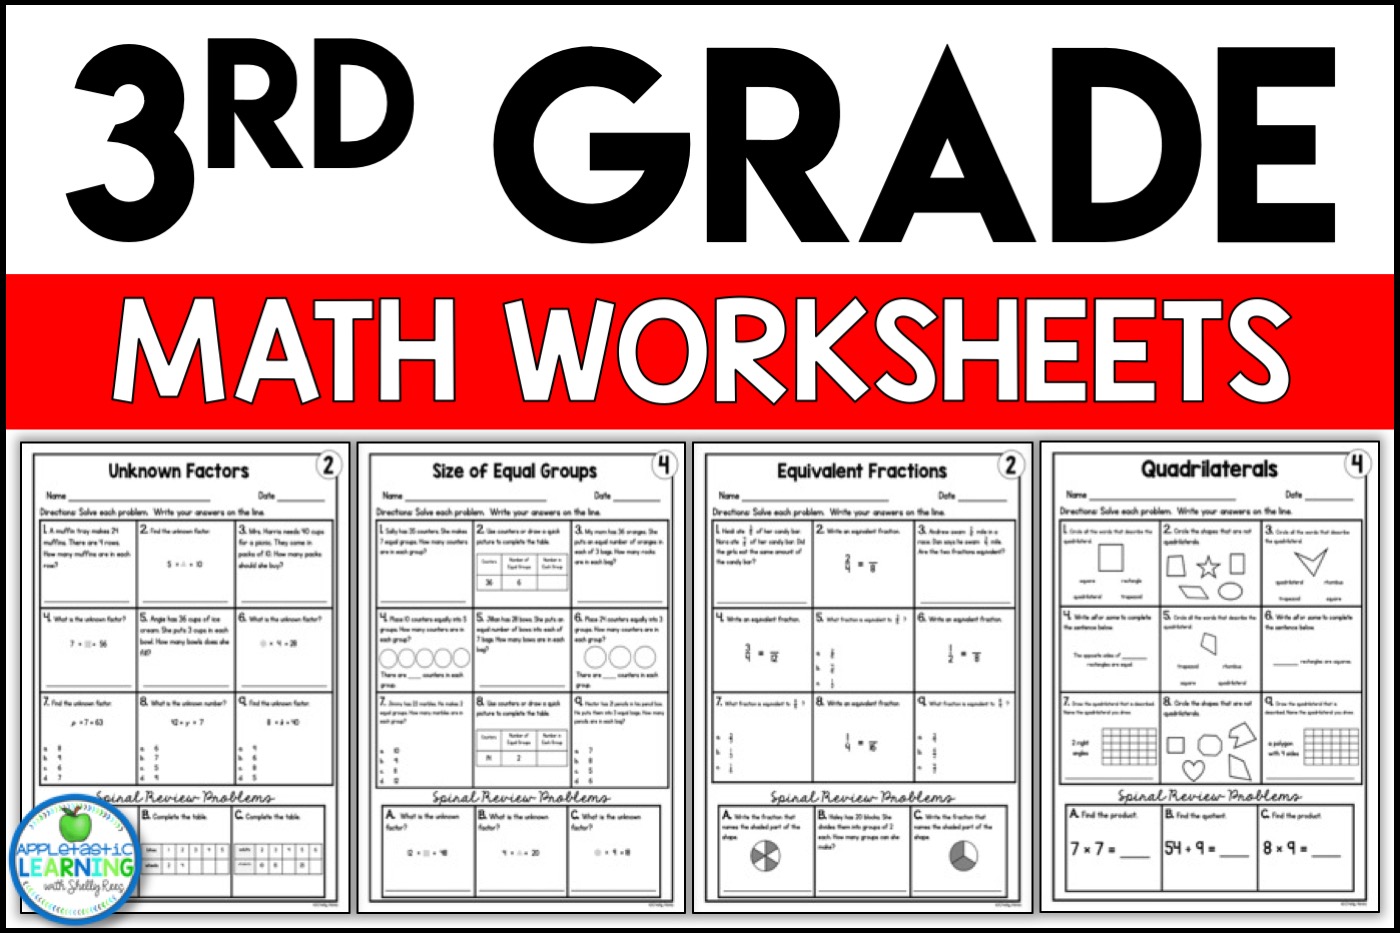 3rd Grade Math Worksheets Free and Printable - Appletastic ...